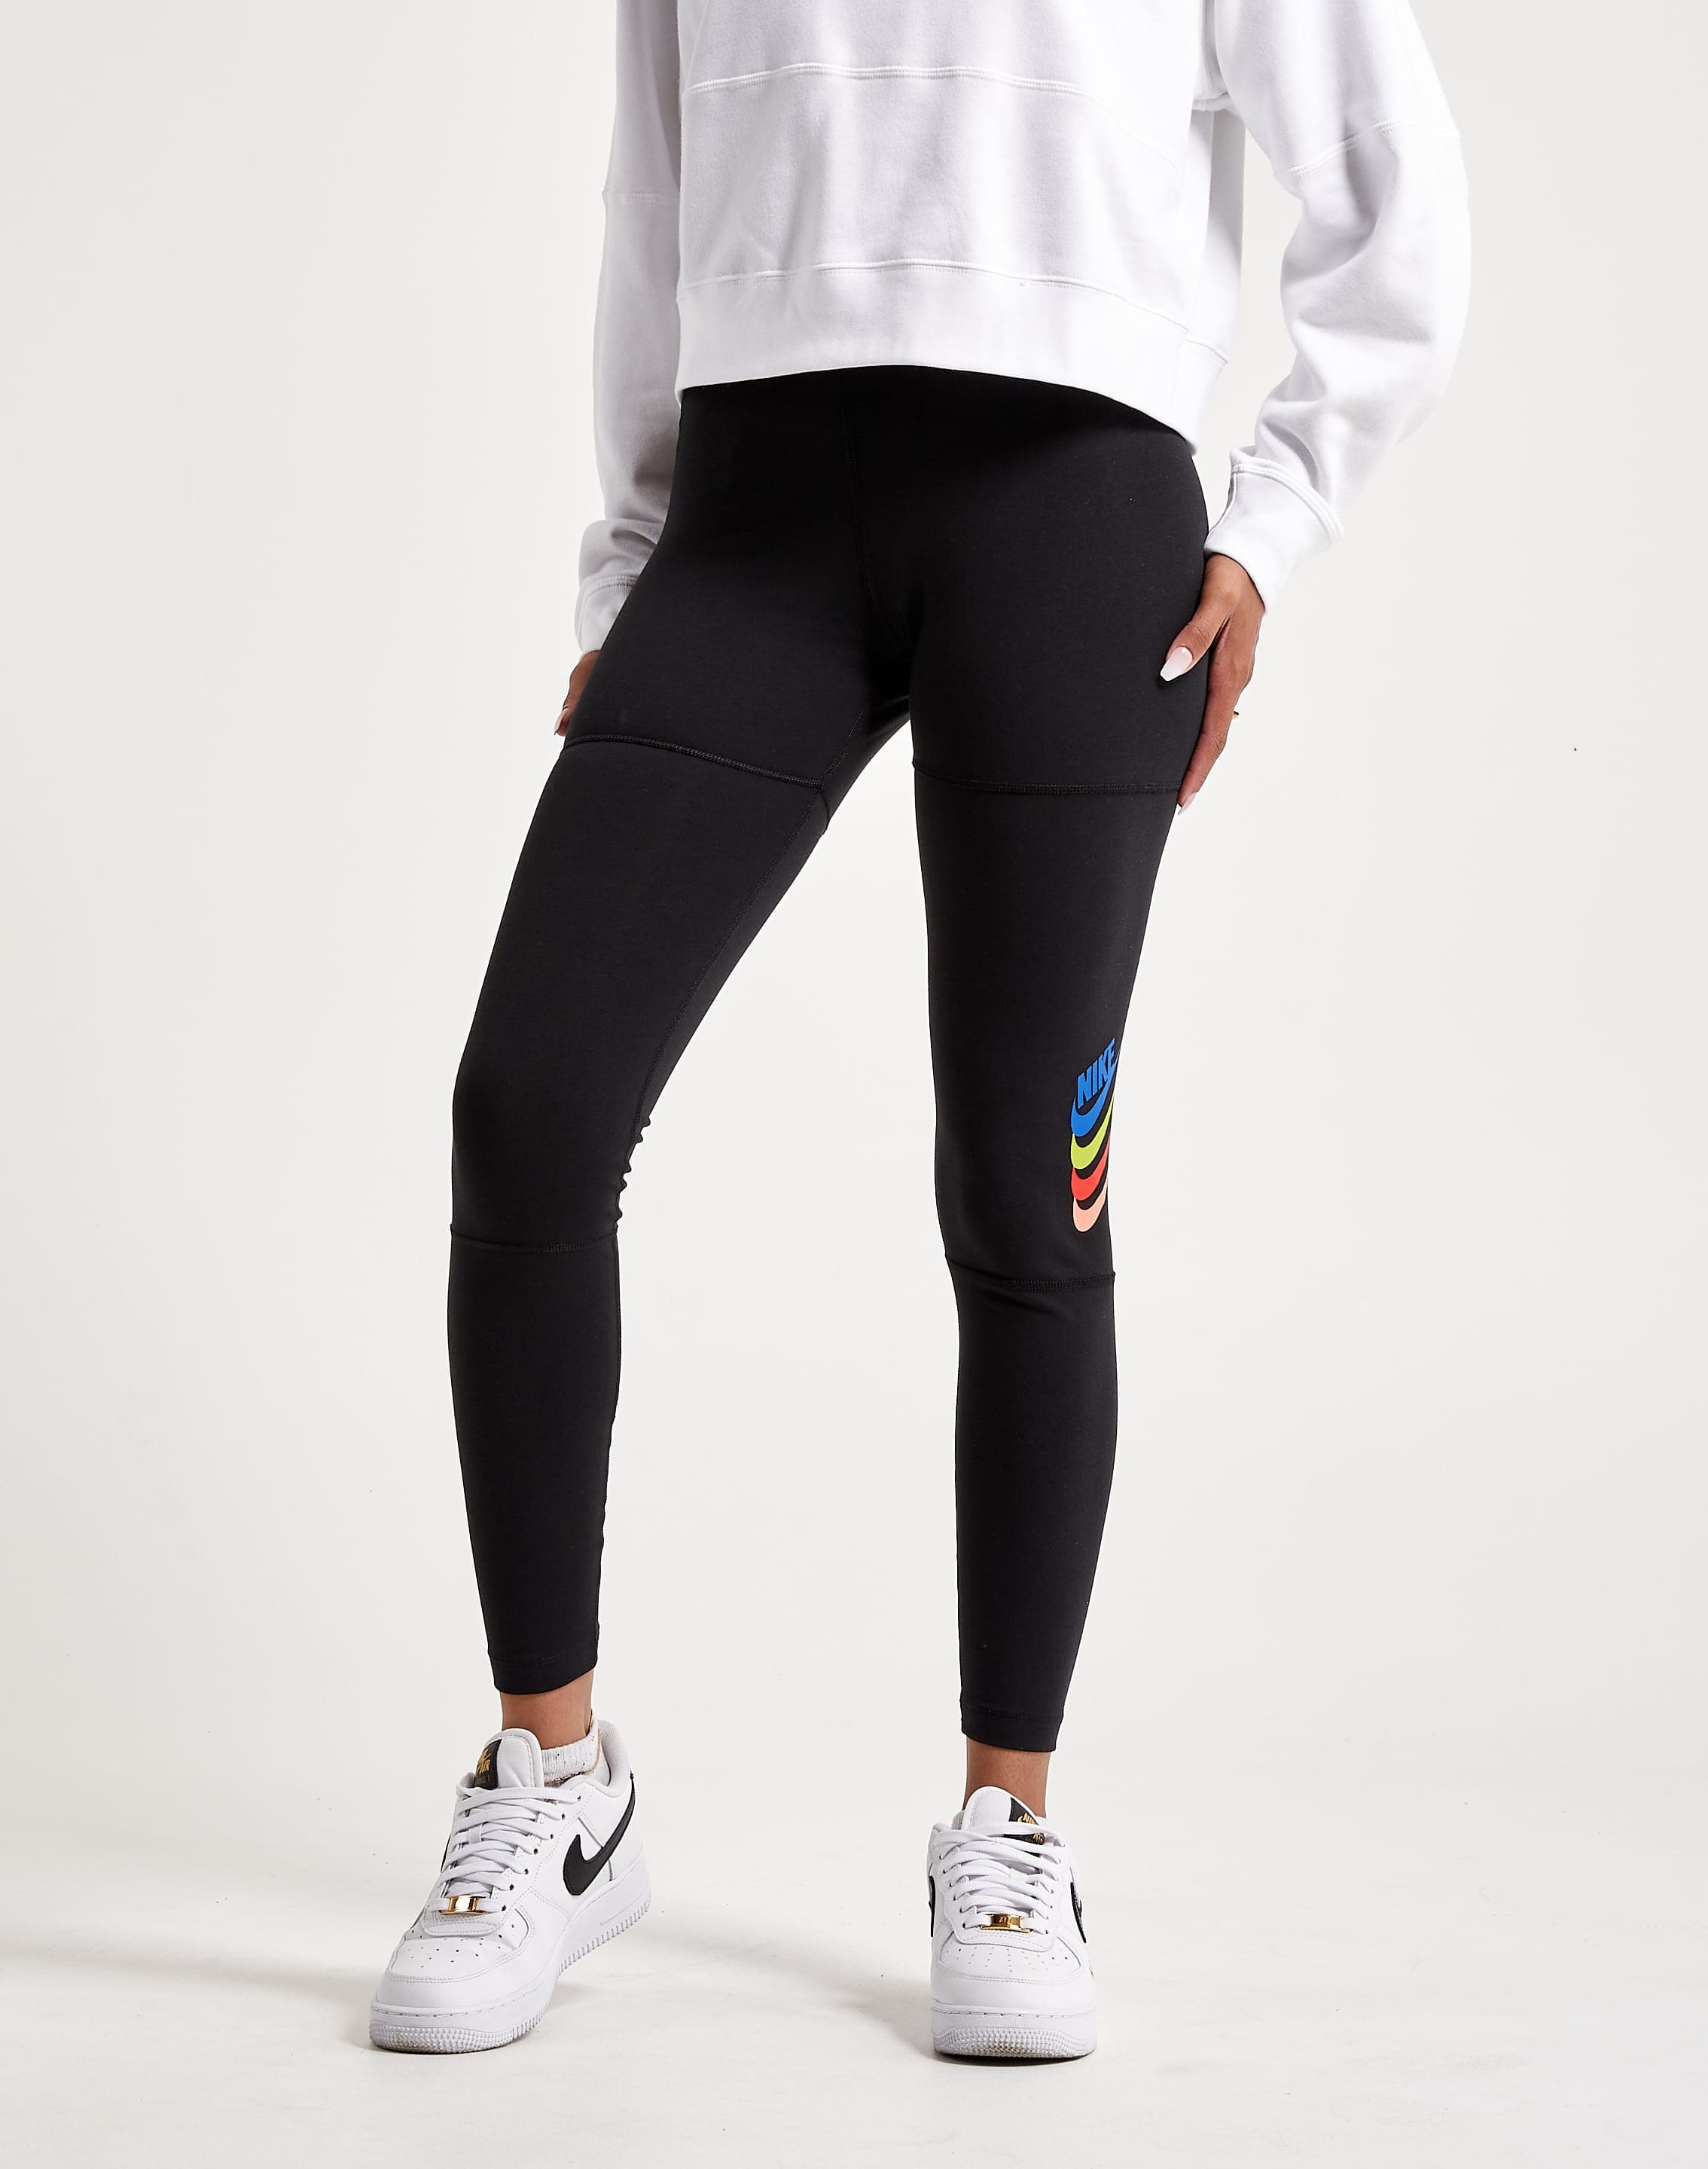 Nike Dna Leggings – DTLR